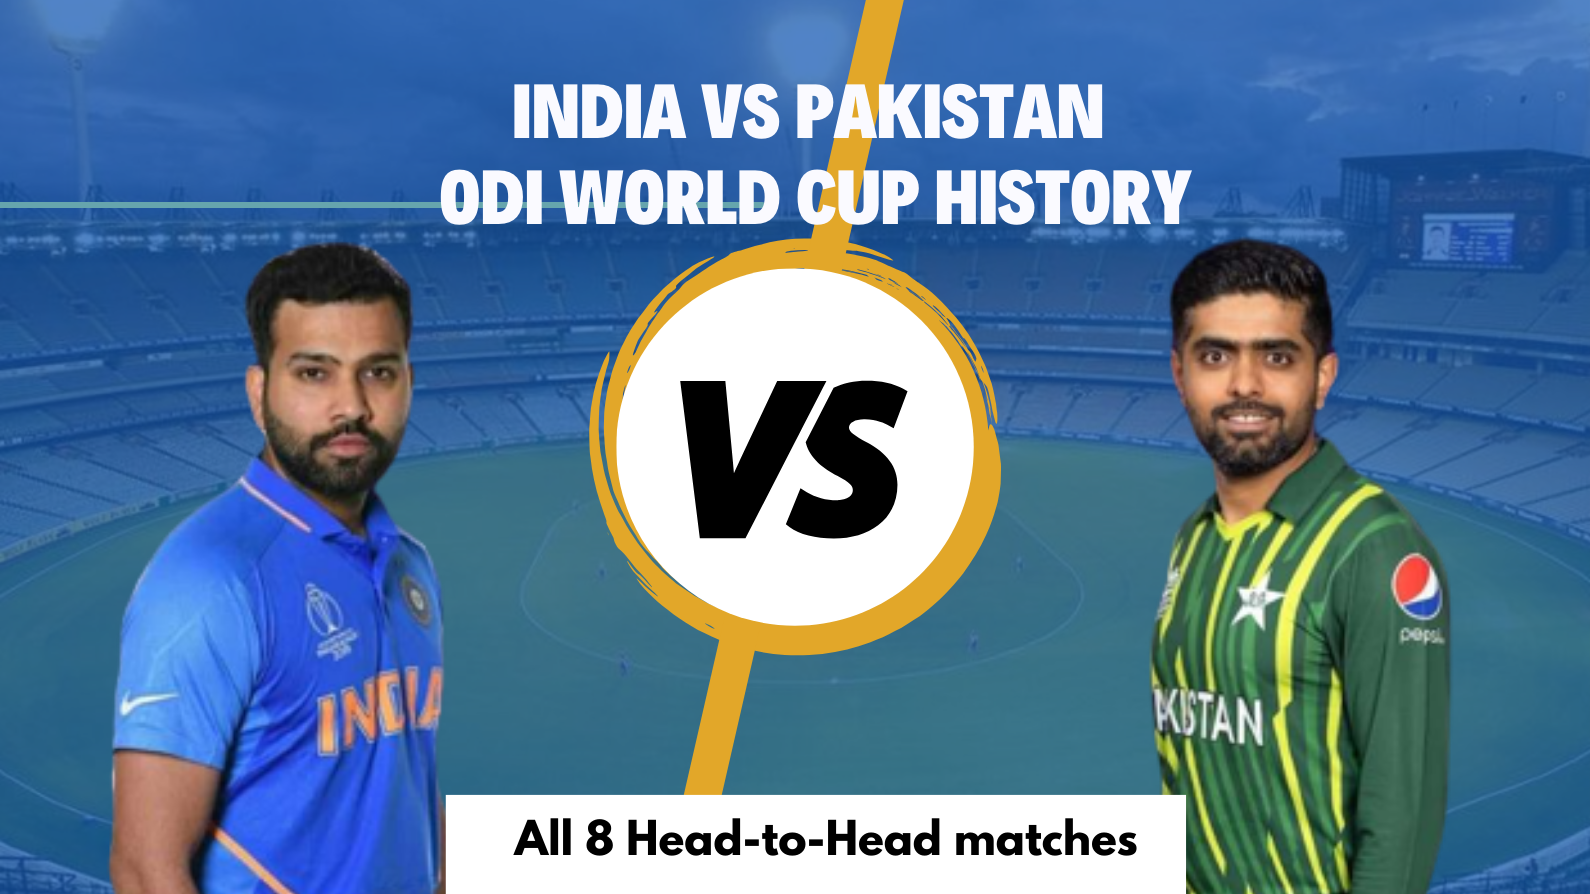 India vs Pakistan ODI World Cup History: All 8 Head-to-Head matches